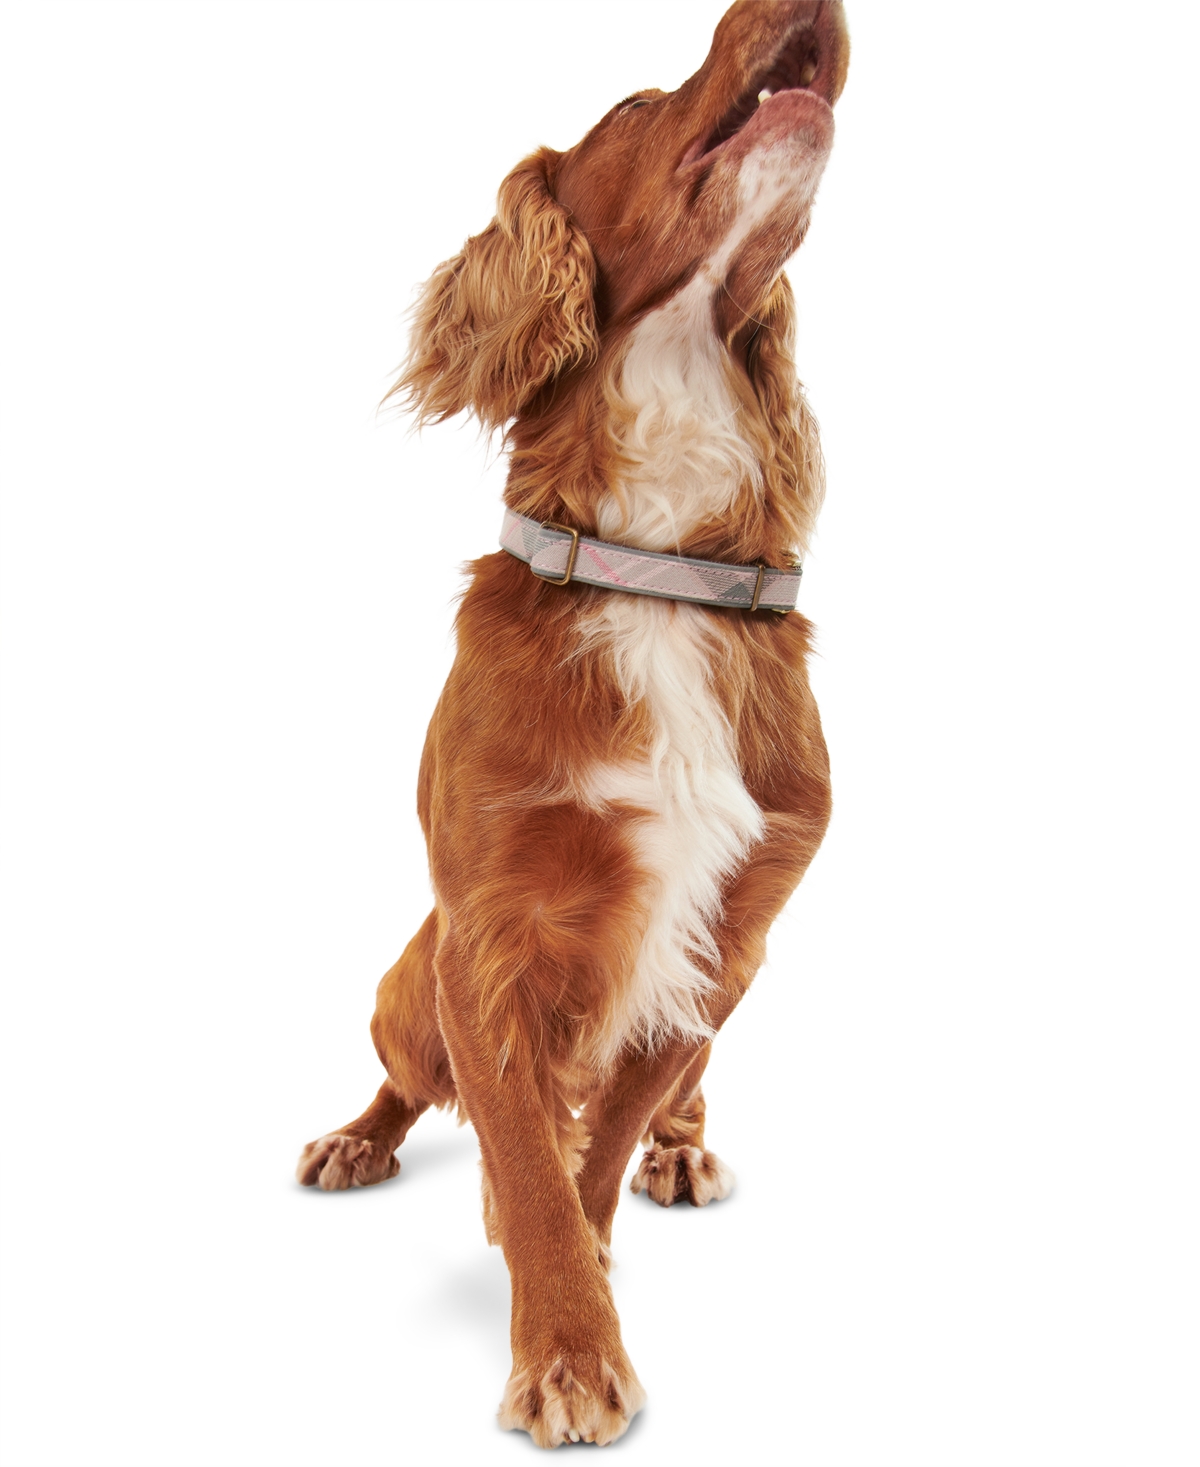 Reflective Tartan Adjustable-Fit Dog Collar - Taupe/pink